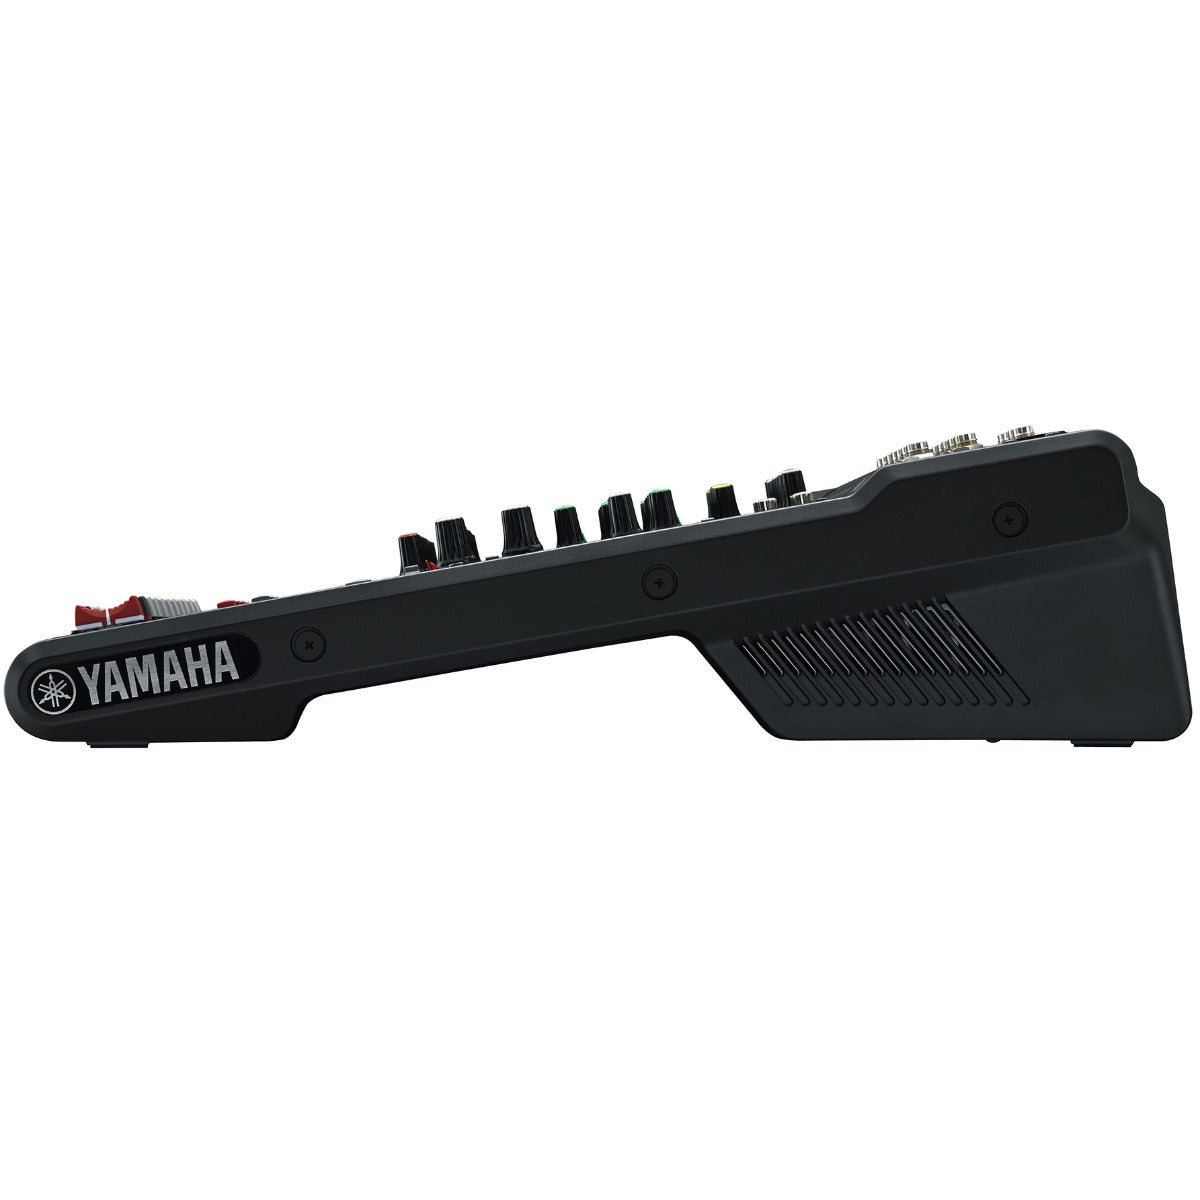 Yamaha MG12XU 12-Channel Compact Stereo Mixer and USB Audio Interface - View 4